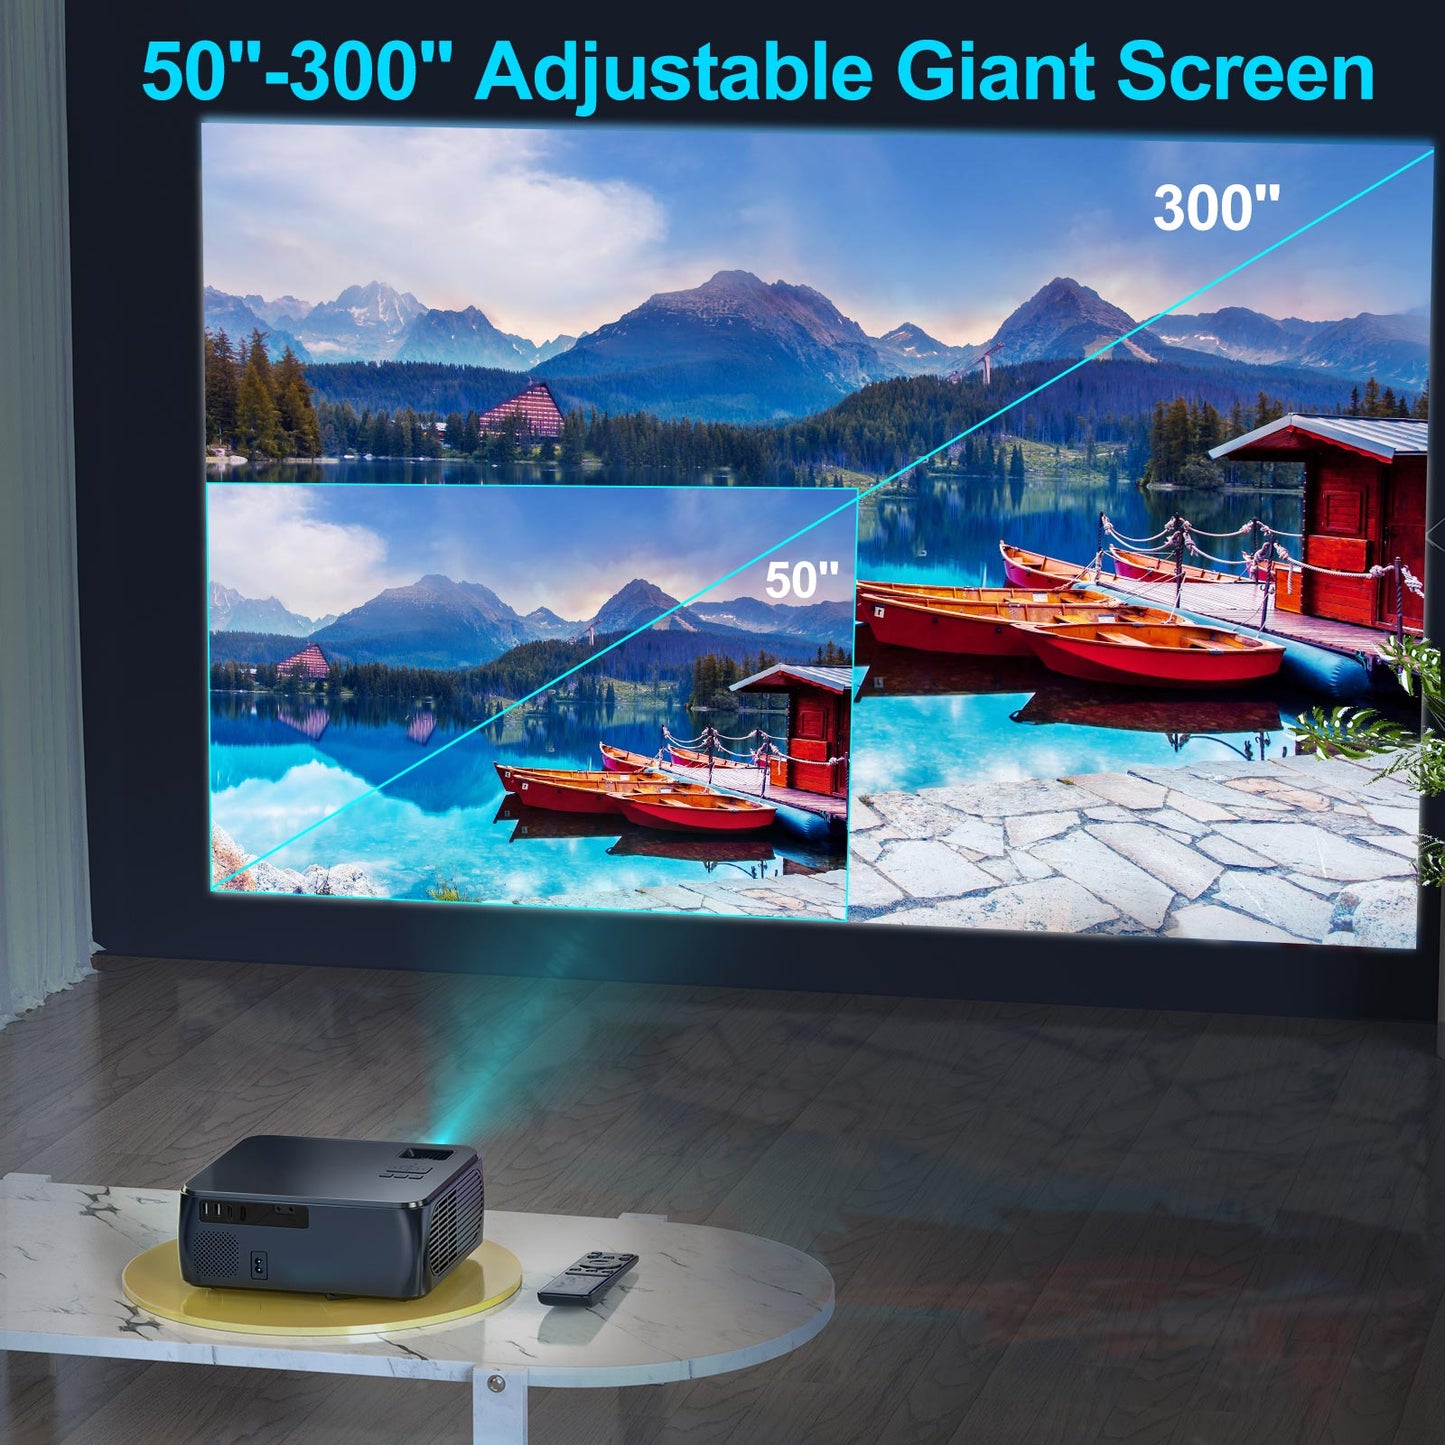 WIMIUS 4K Projectors 5G WiFi Bluetooth Full HD Projector Native 1080p